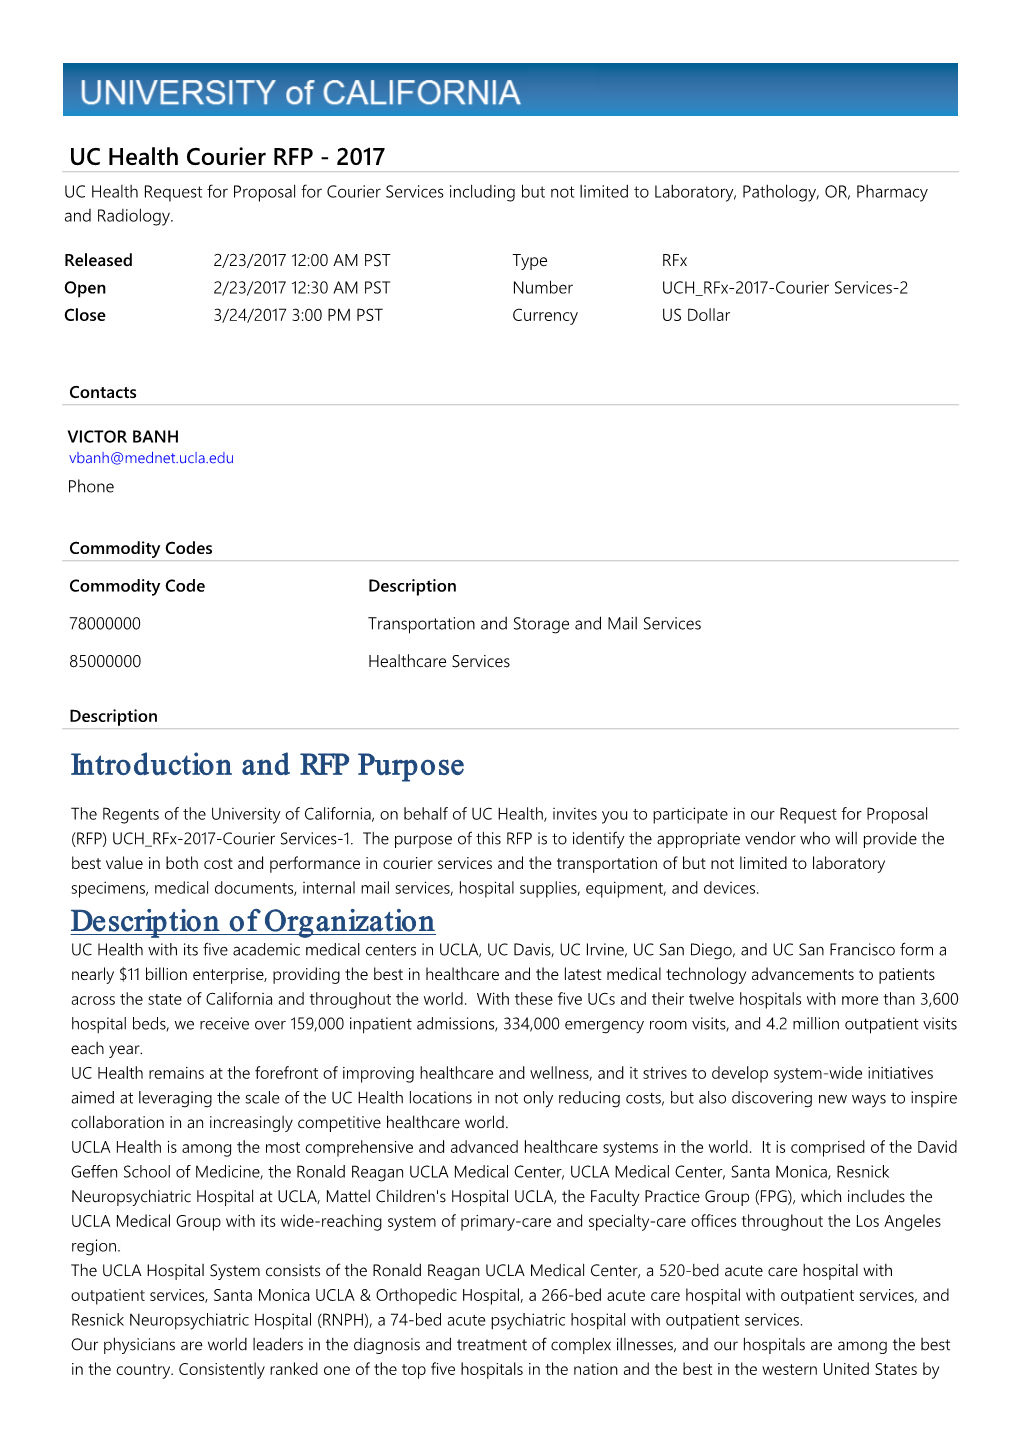 Introduction and RFP Purpose Description of Organization